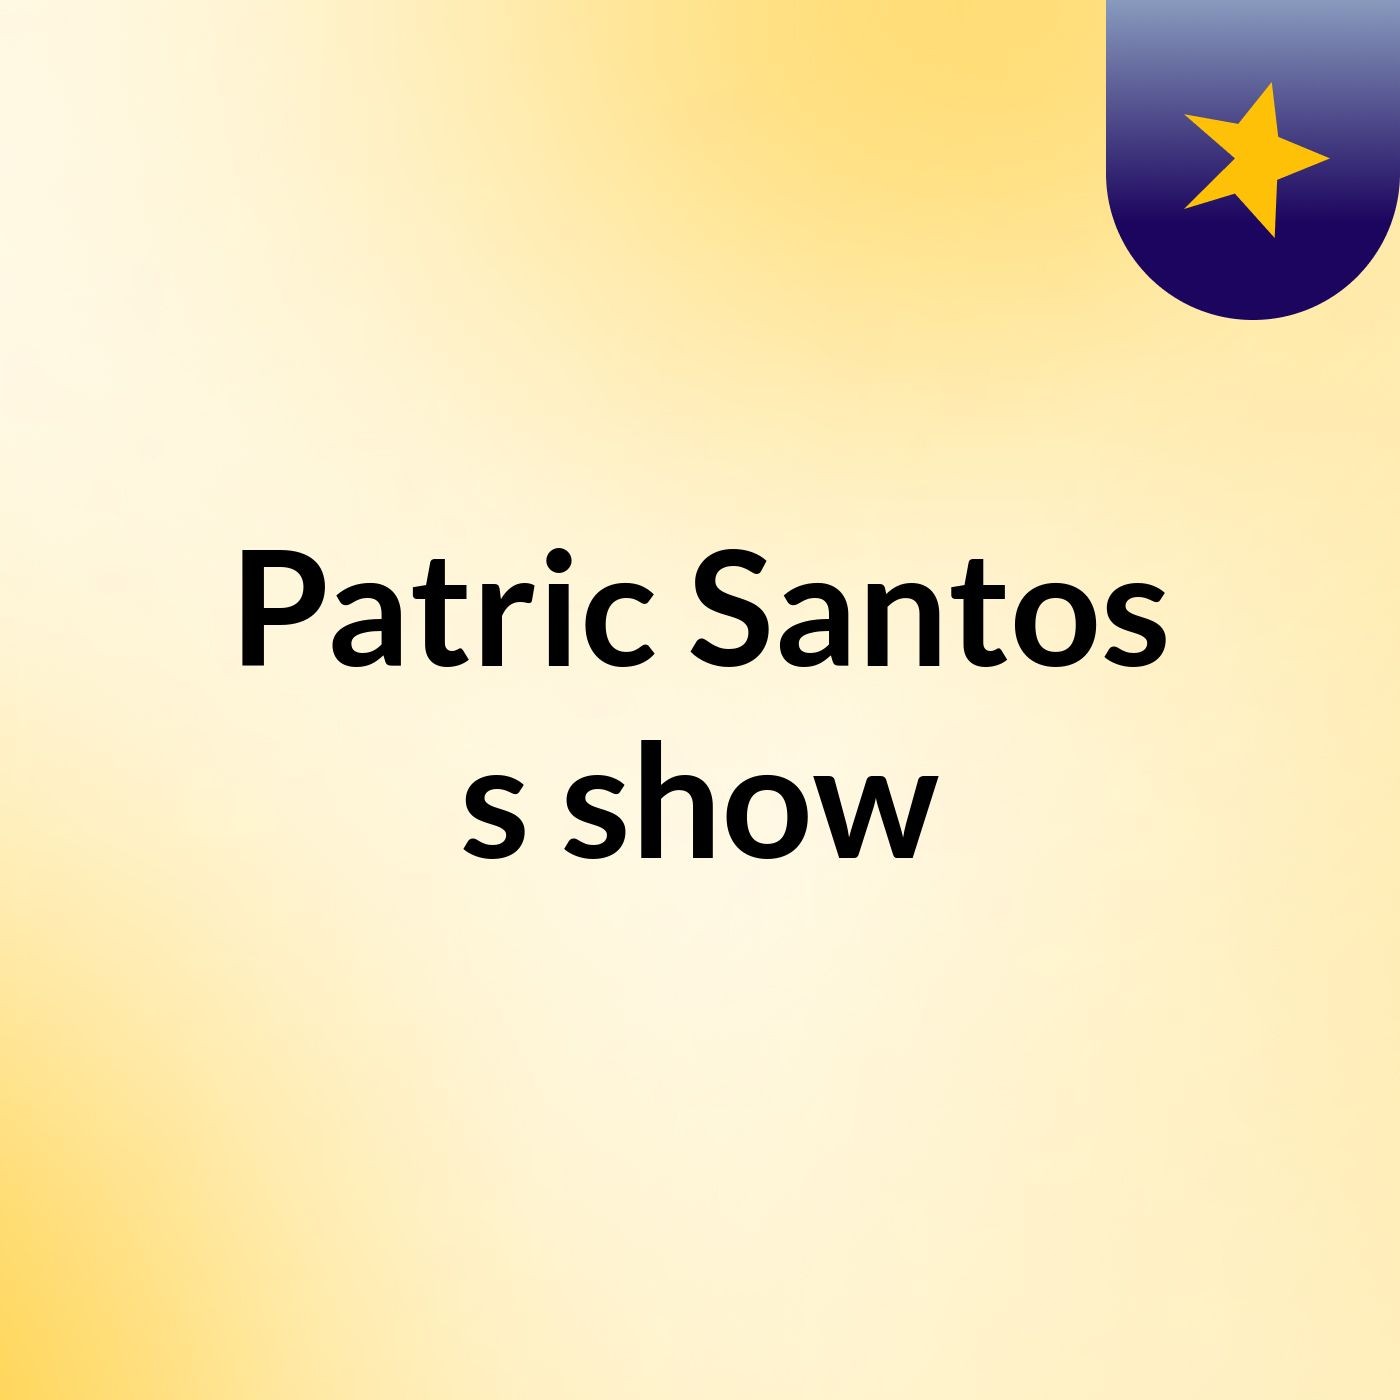 Patric Santos's show